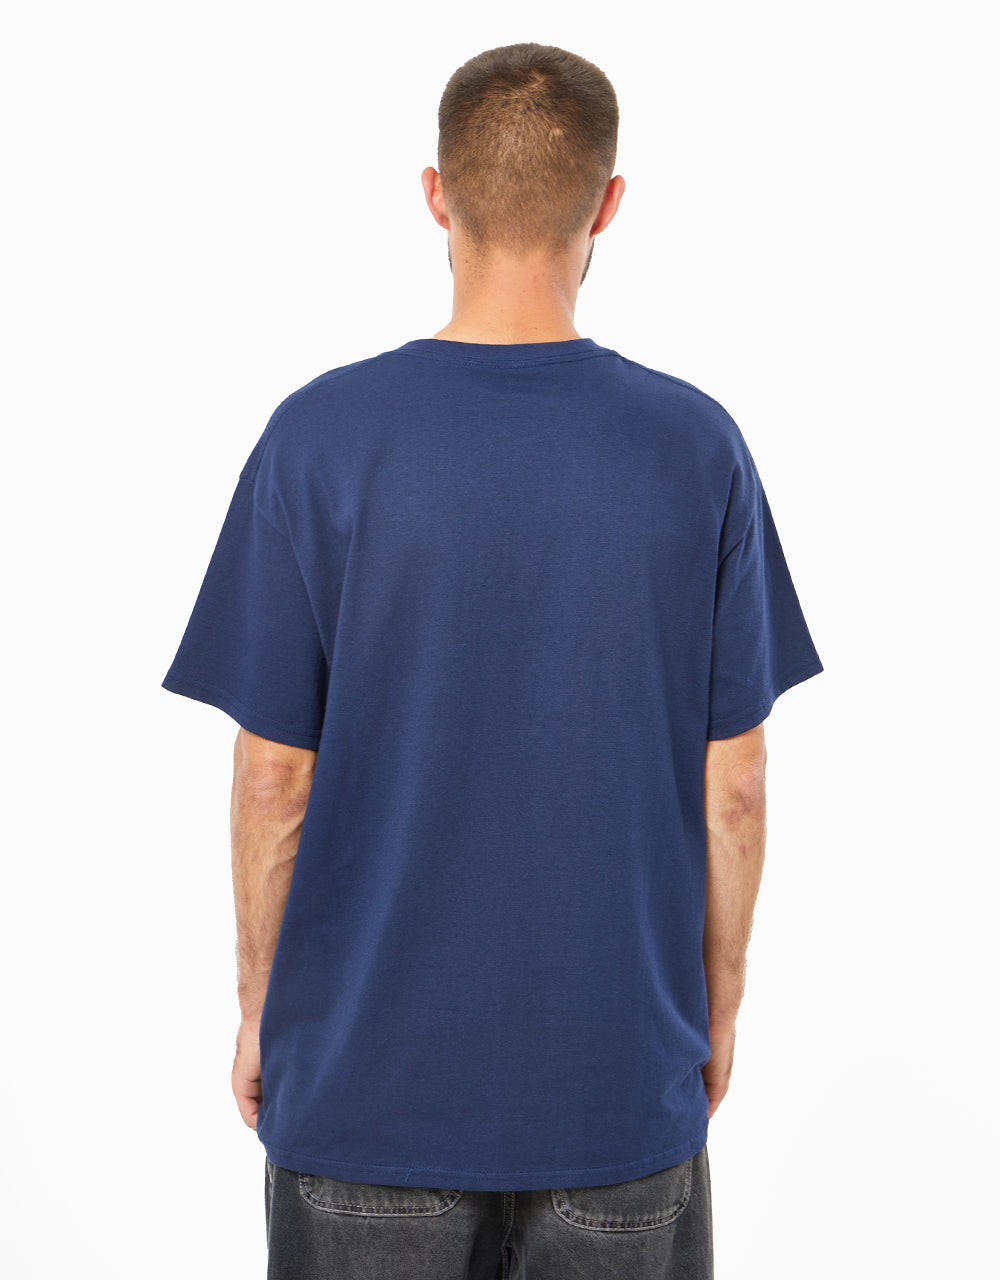 Krooked Style T-Shirt - Navy/Multi